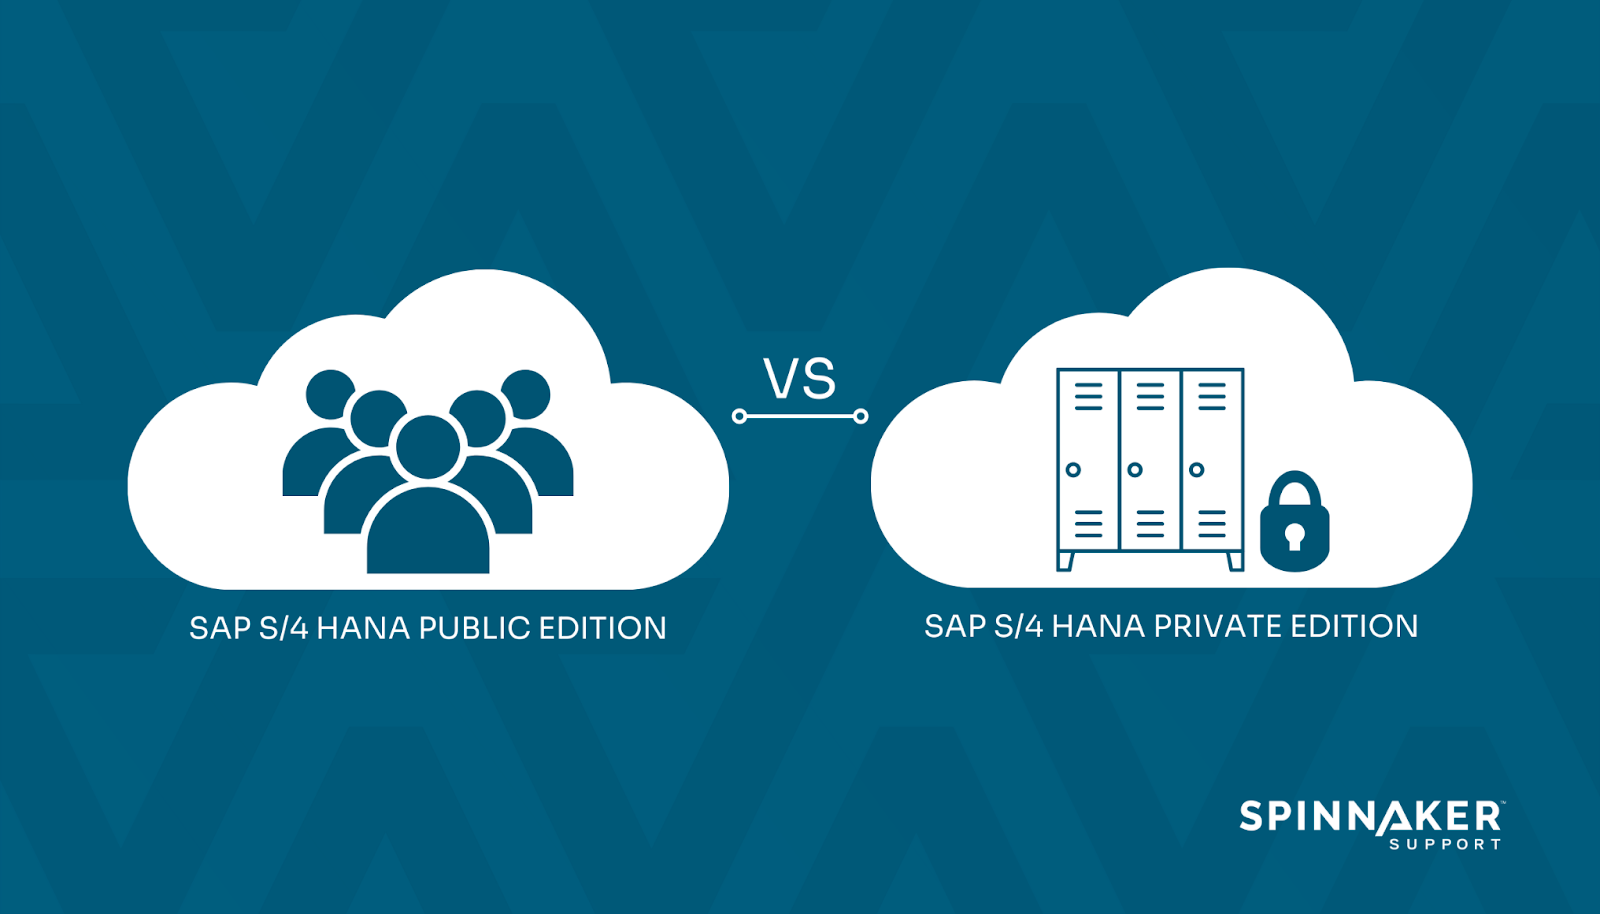 Image showing public vs. private S/4HANA cloud editions.